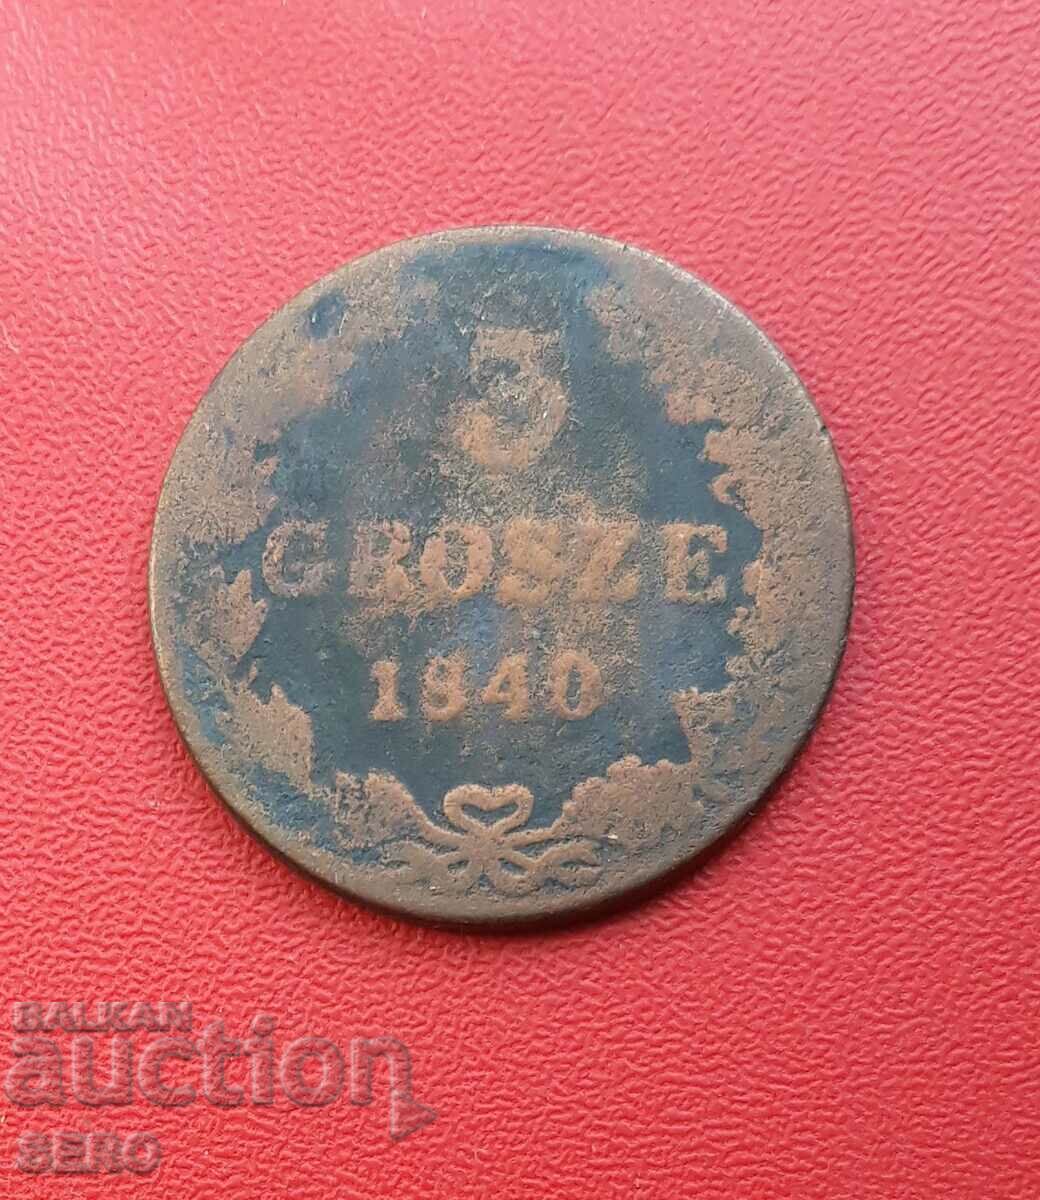 Rusia/pentru Polonia/-3 groshis 1840-loturi rare-circulatie 117 x. Nu